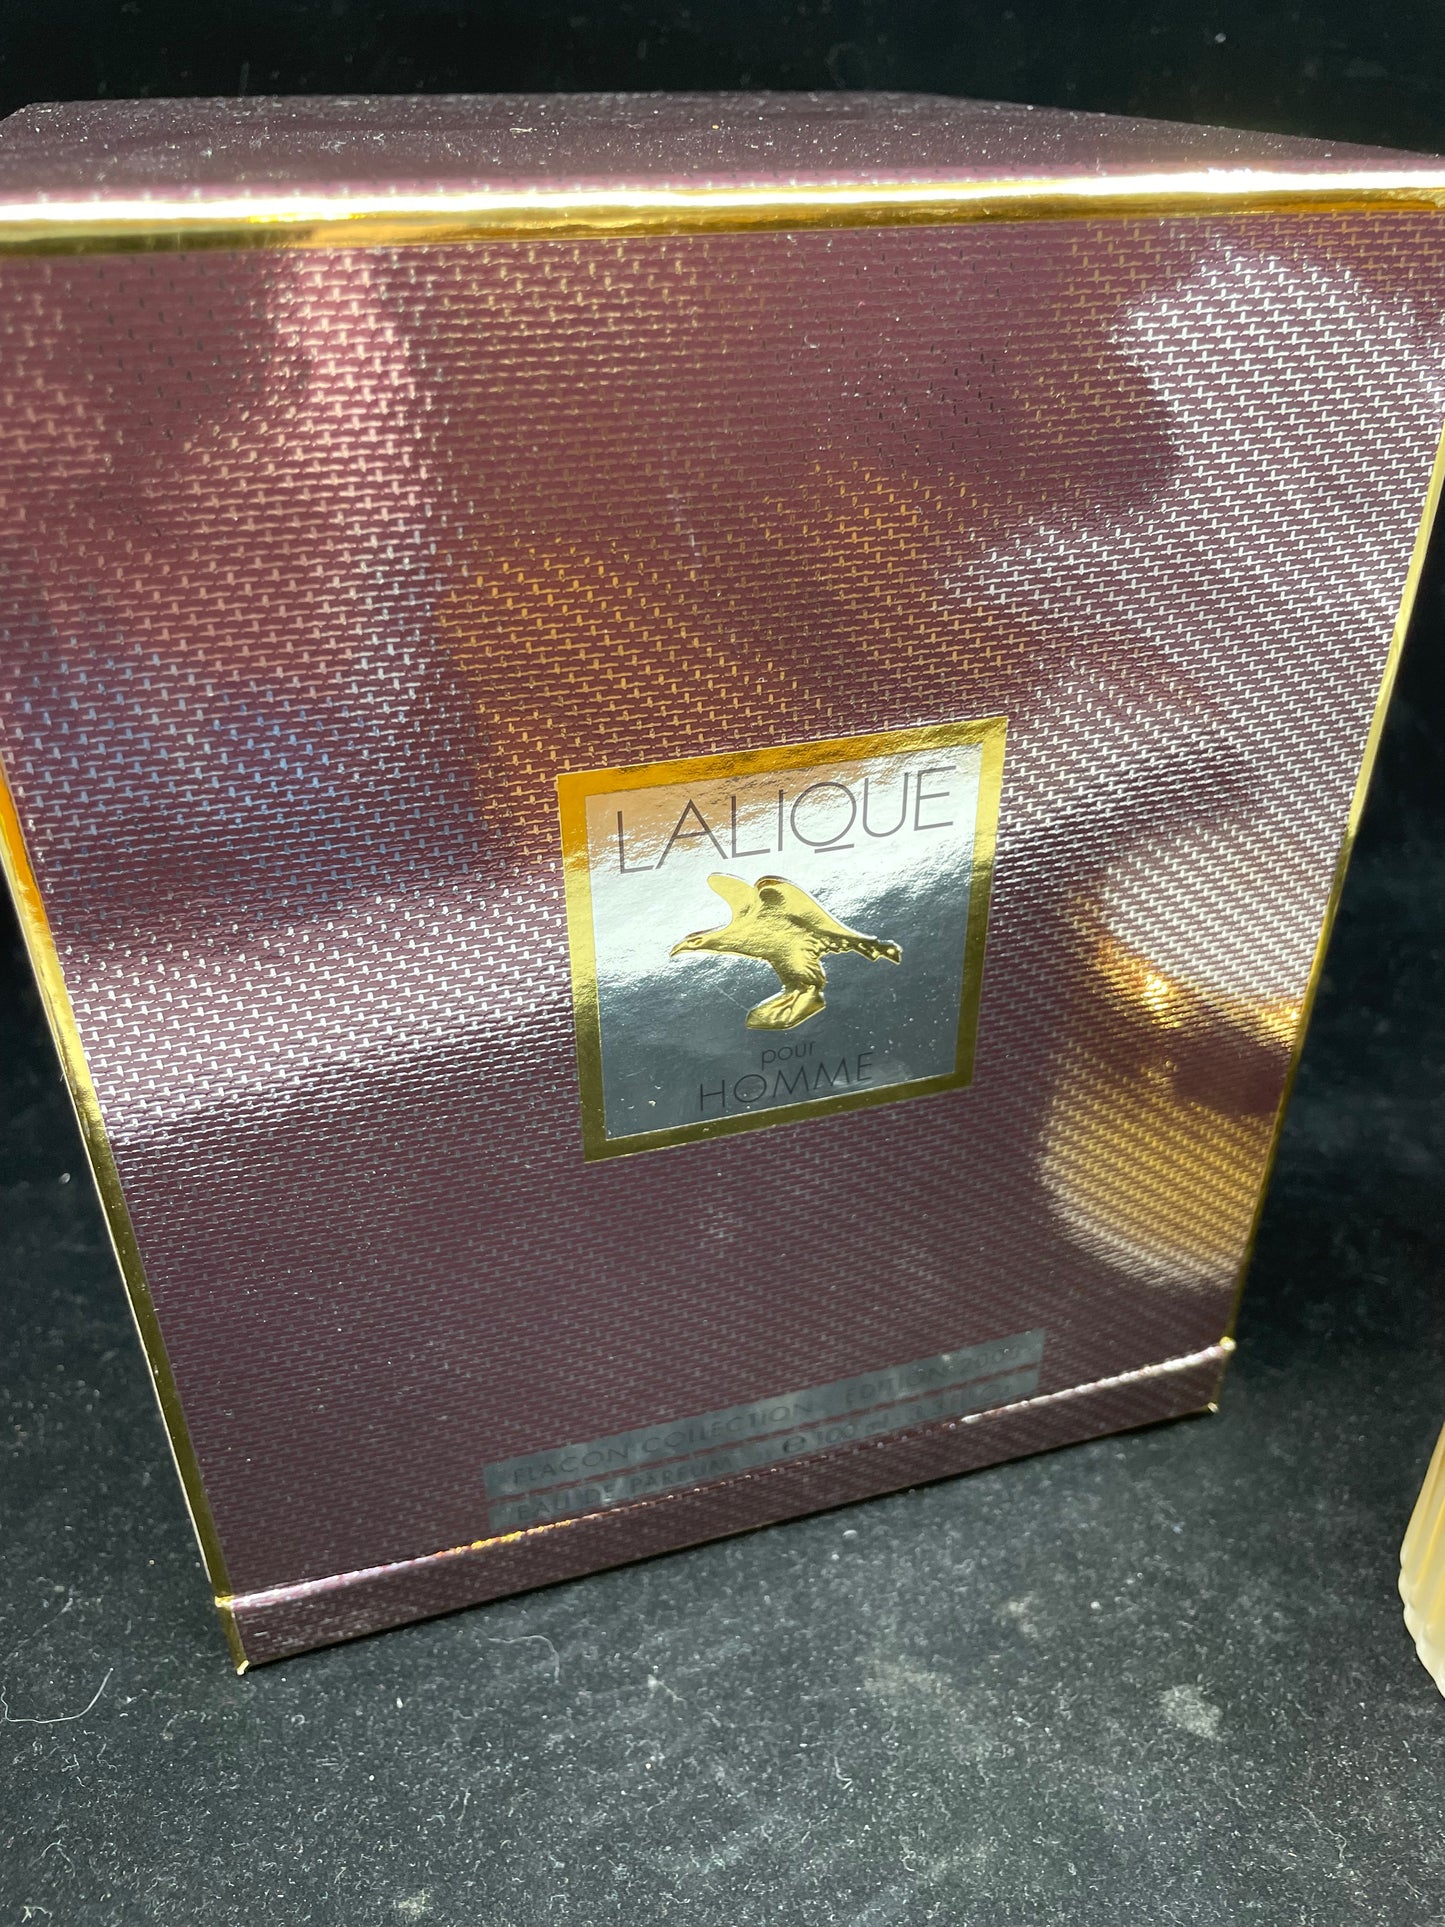 Lalique France "Flacon Collection" Pour Homme 2003 Edition